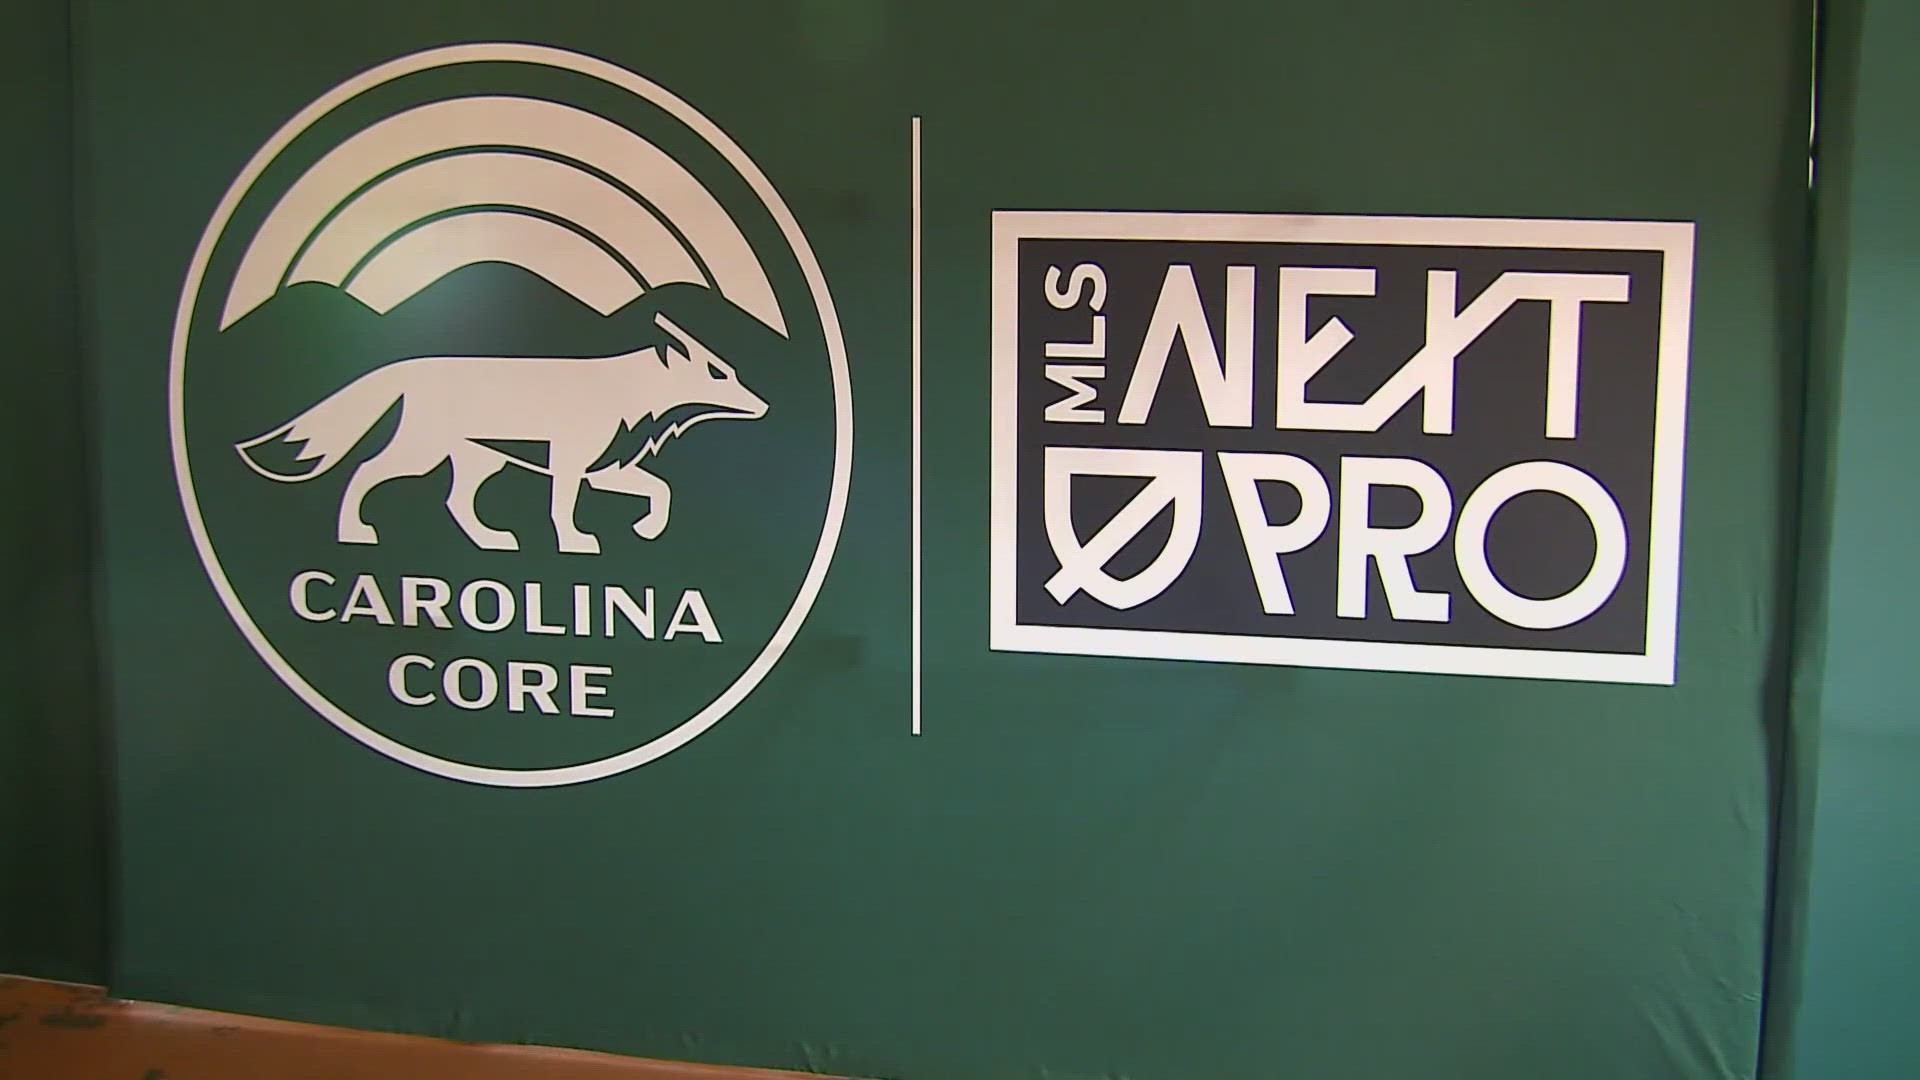 MLS Next Pro adds Carolina Core FC for the 2024 season - The